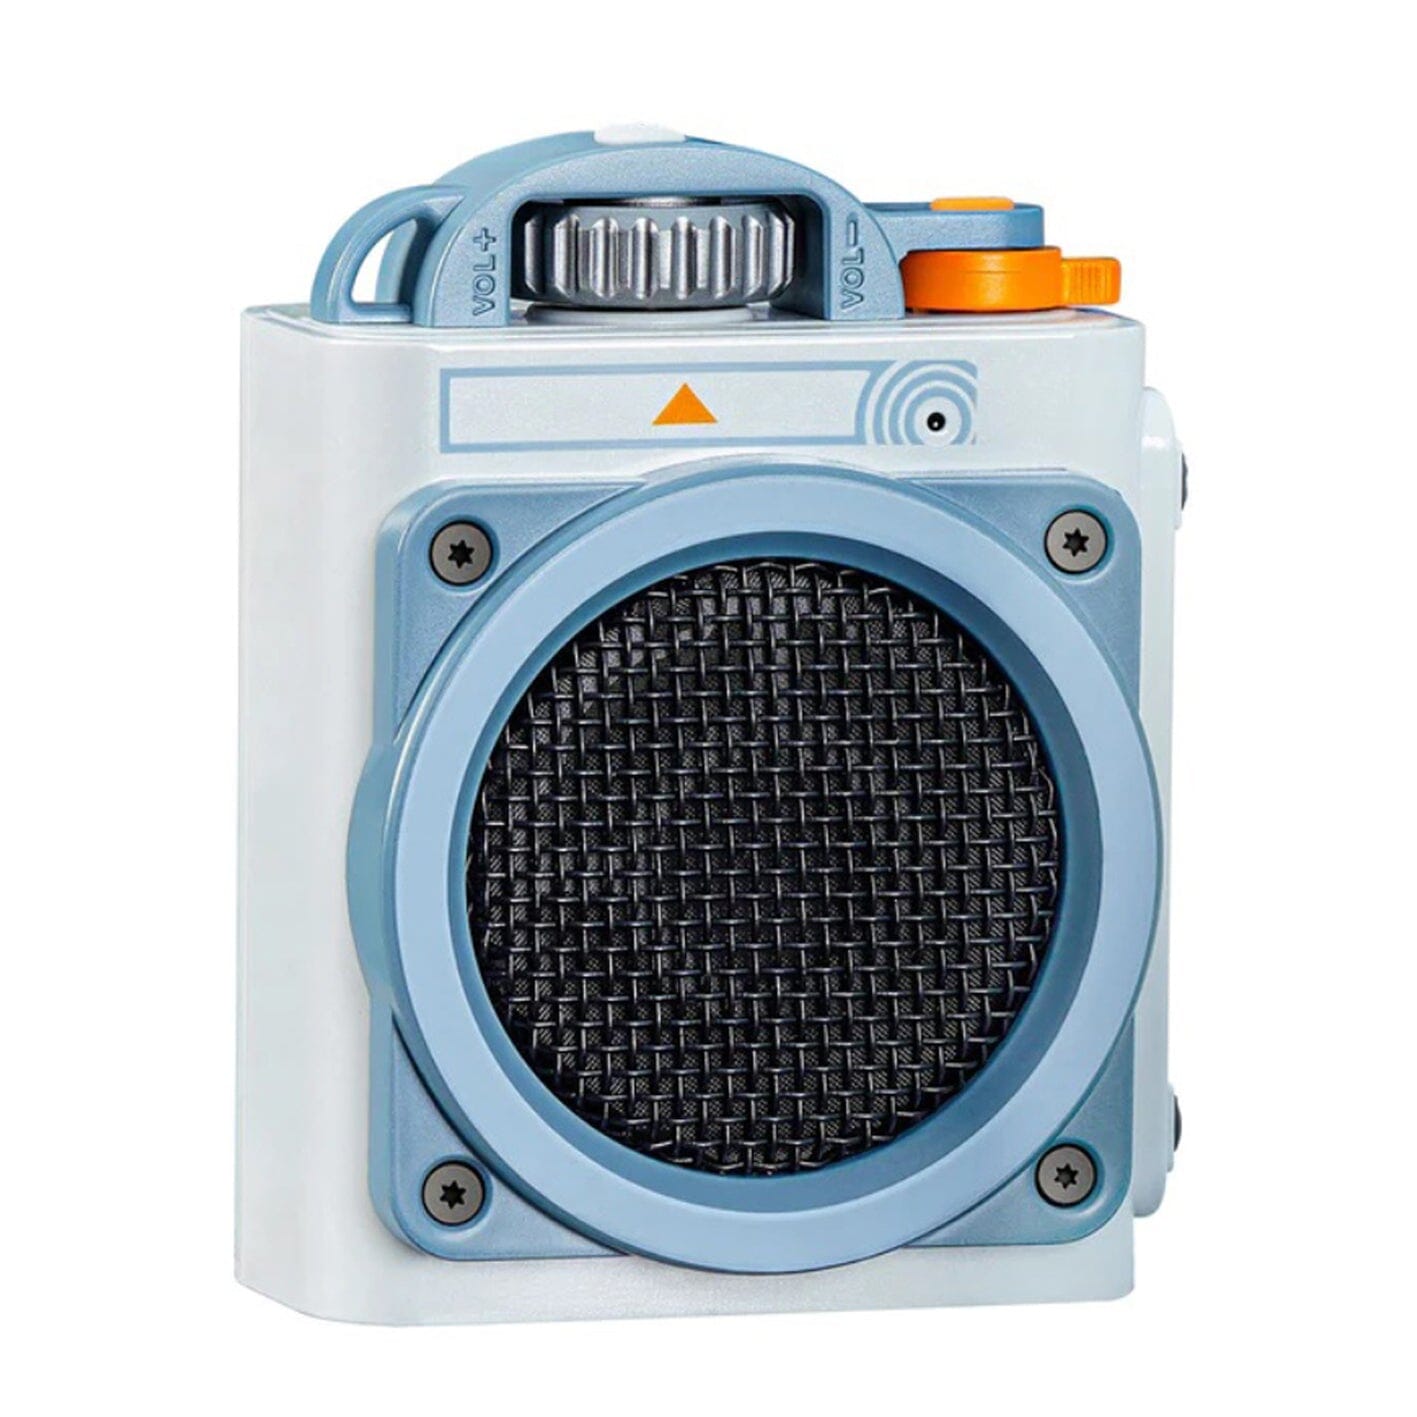 Muzen Wild Go Bluetooth Portable Speaker, Mini Size, Loud Volume, Deel Bass, Wireless Speaker, for Travel Outdoor Muzen Gravel White 